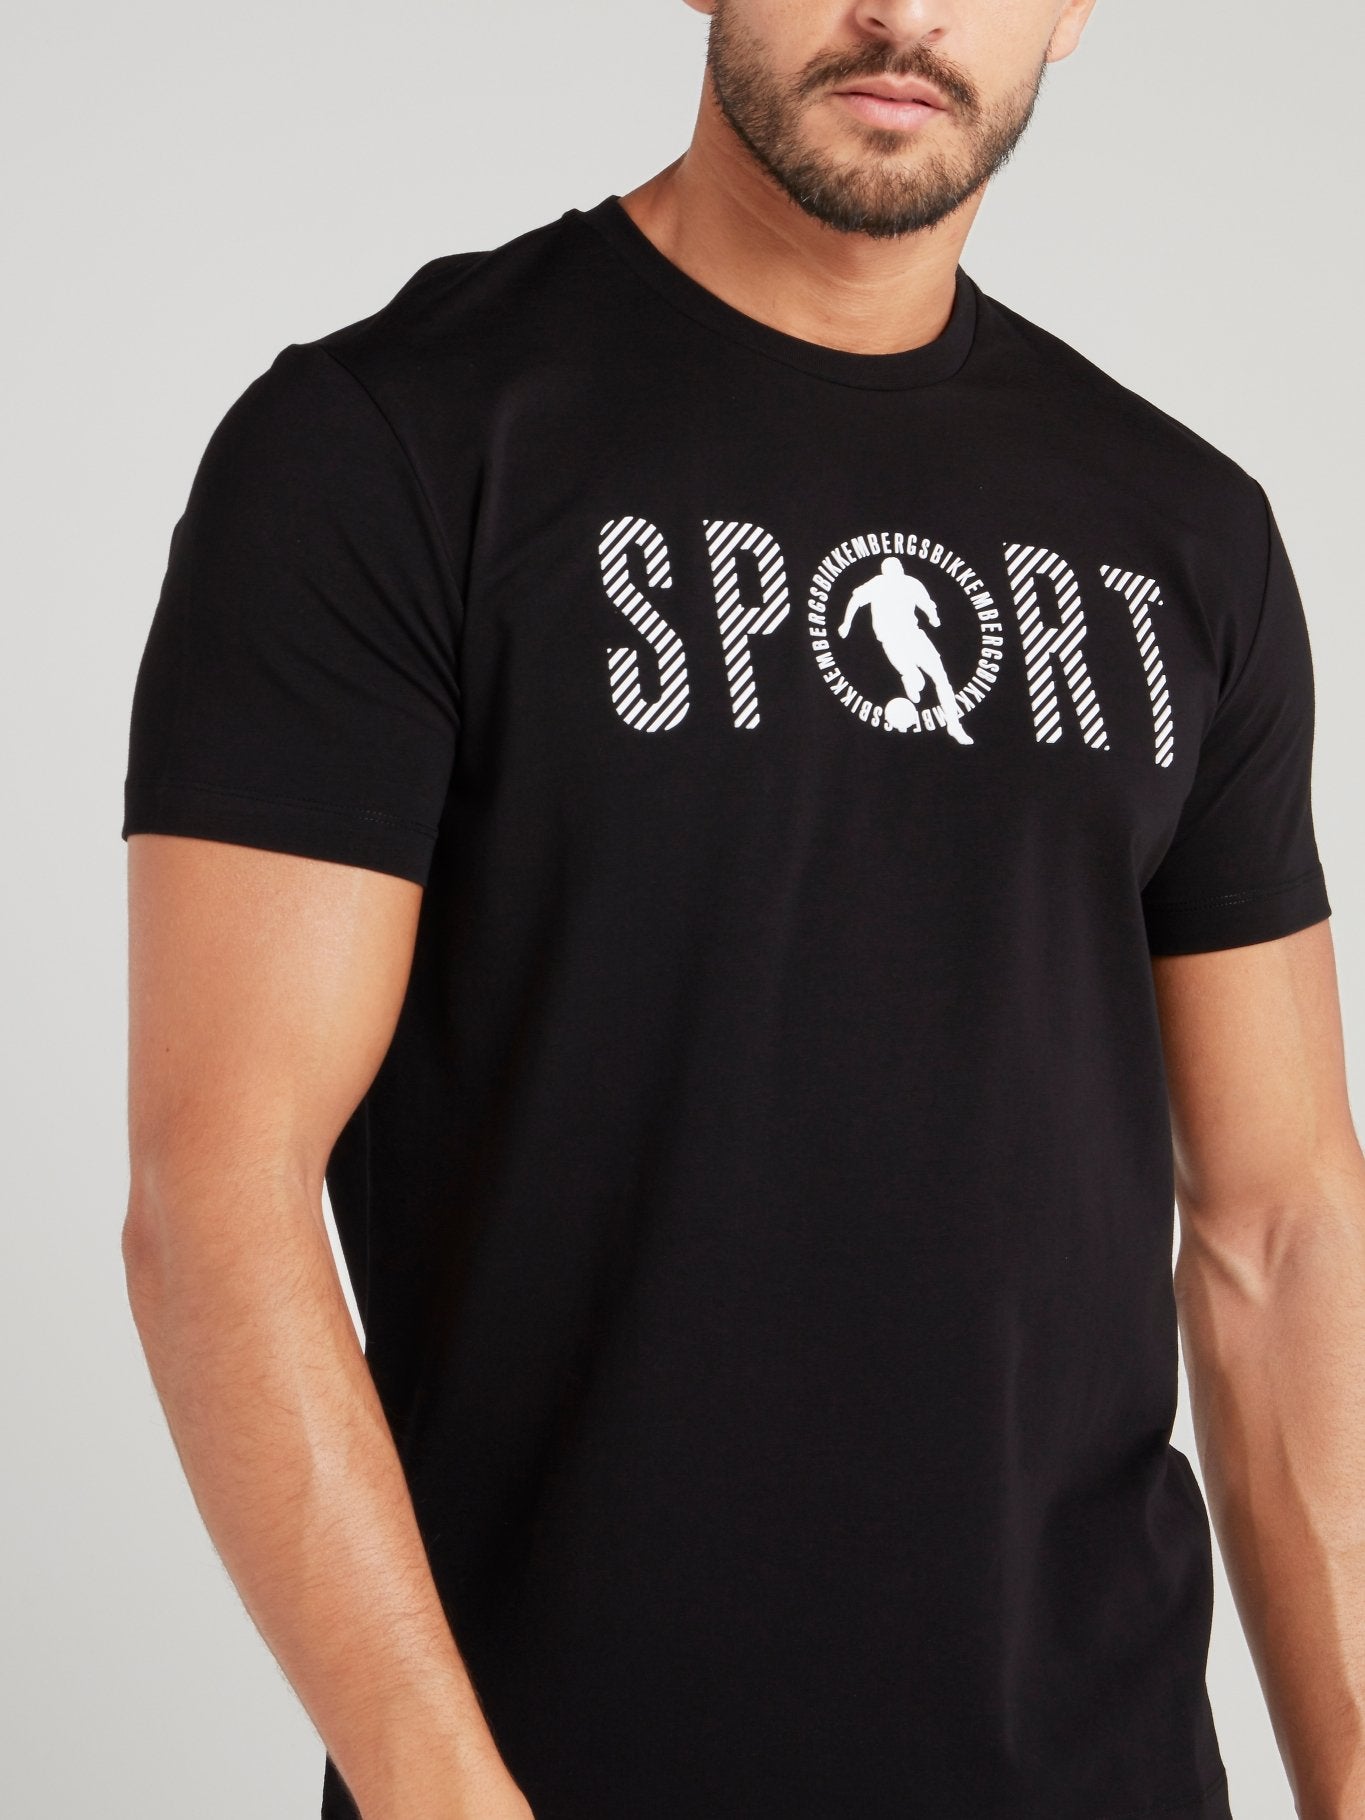 Black Sport Print T-Shirt